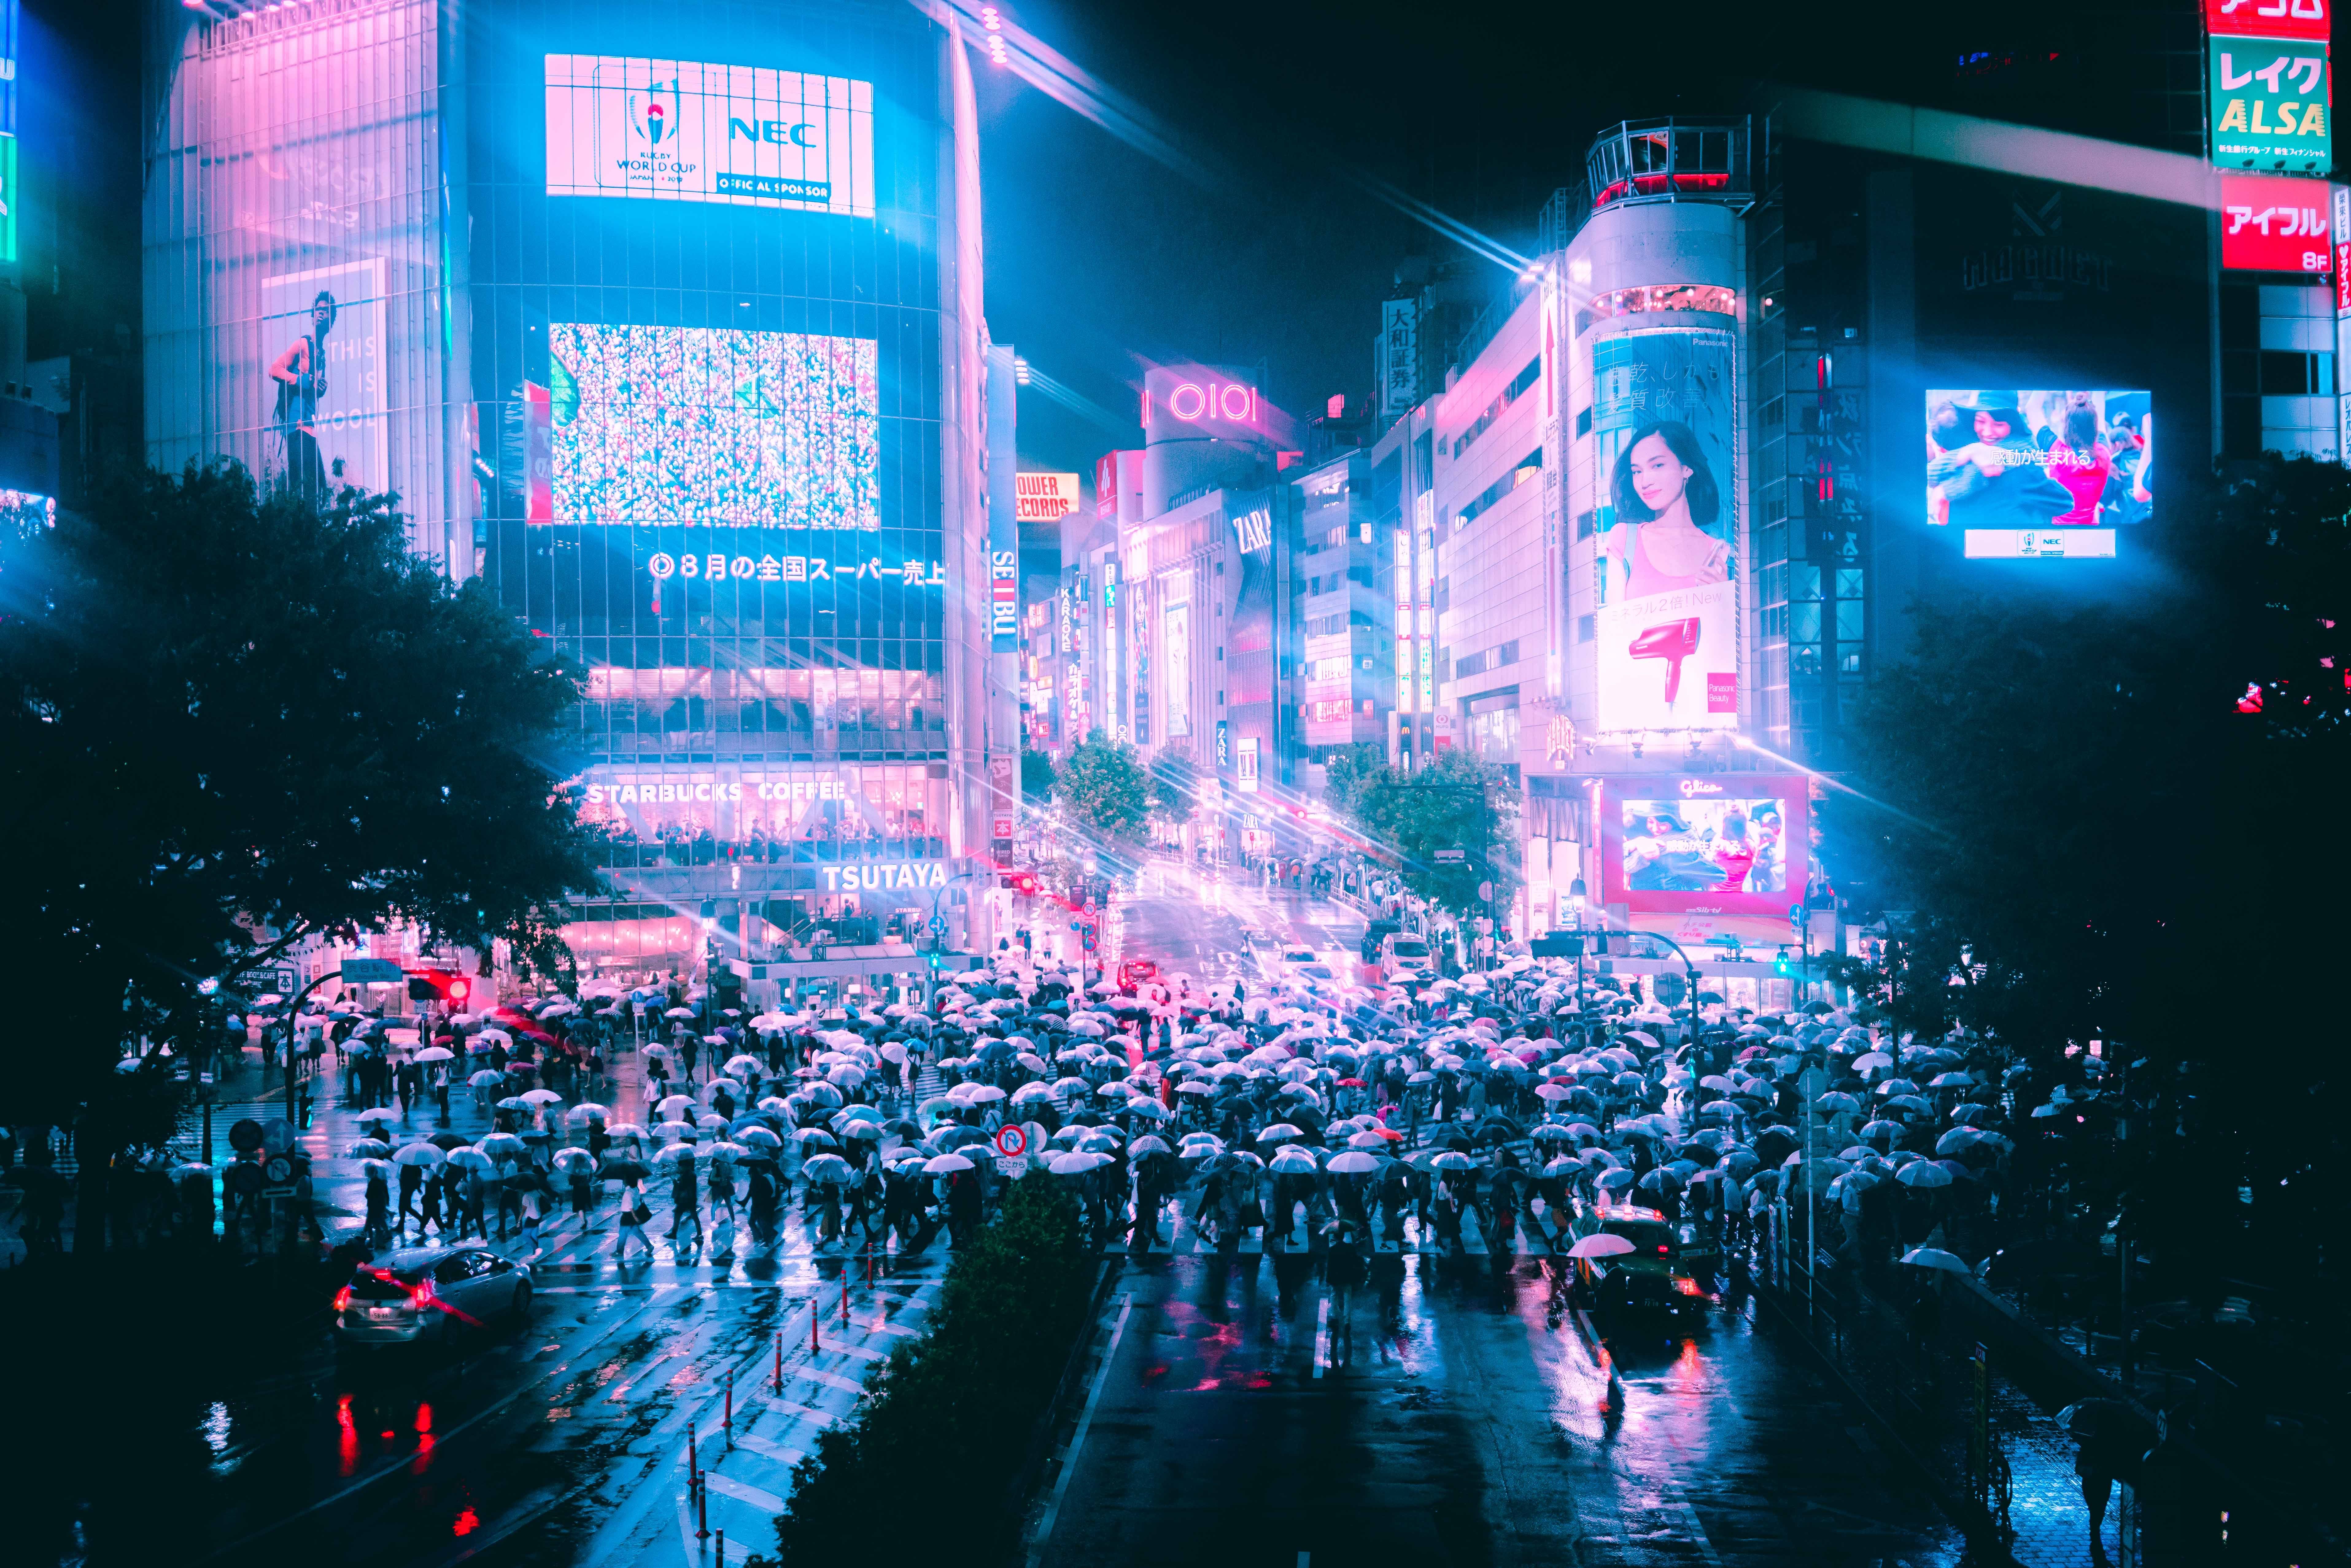 7660x5109 #umbrella, #tokyo, #neon, #crowd, #manga, #cyberpunk, #Creative Commons image, #street, #city, #rain, #bright, #japan, #urban, #weather, #night, #asium, #anime. Mocah.org HD Desktop Wallpaper